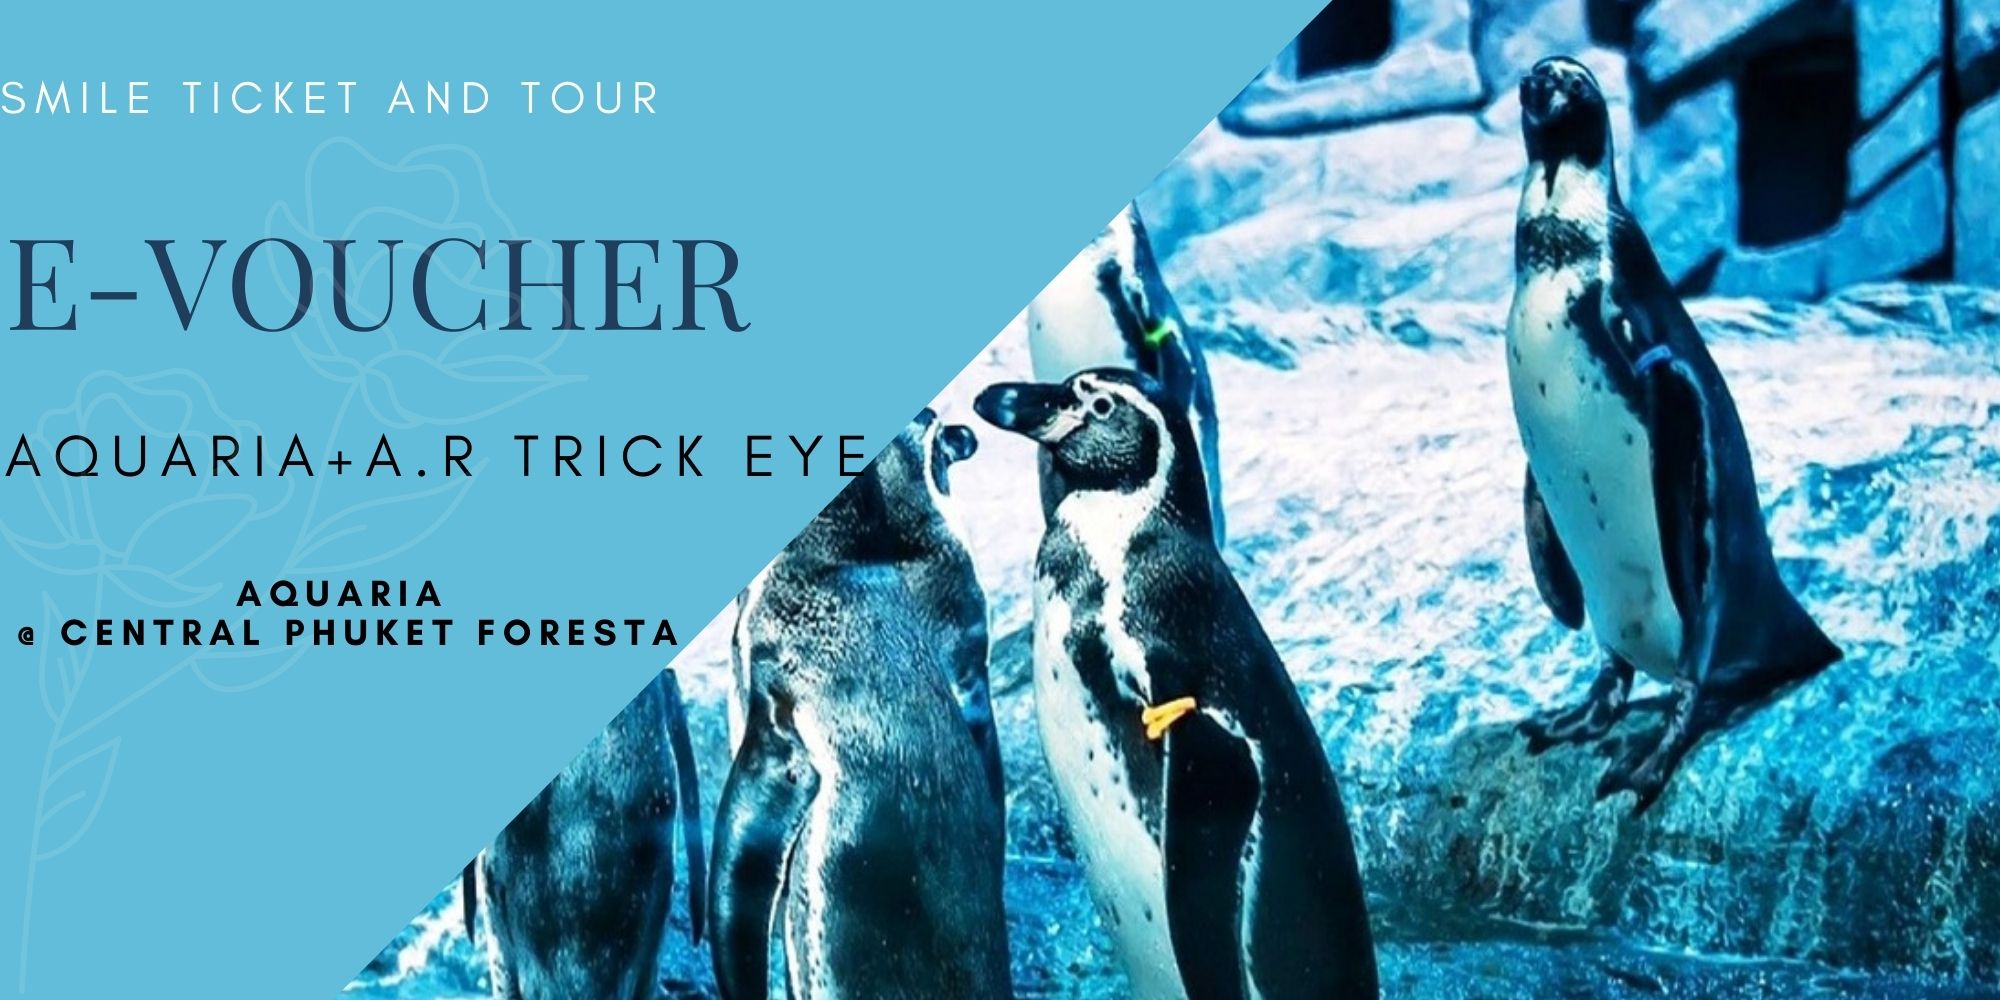 [E-Voucher] บัตรเข้าชม Aquaria เเละ Trick Eye อควาเรียมที่ใหญ่ที่สุดในประเทศไทย Aquaria Central Phuket Foresta ชั้น B1 เที่ยวภูเก็ต ทัวร์ภูเก็ต